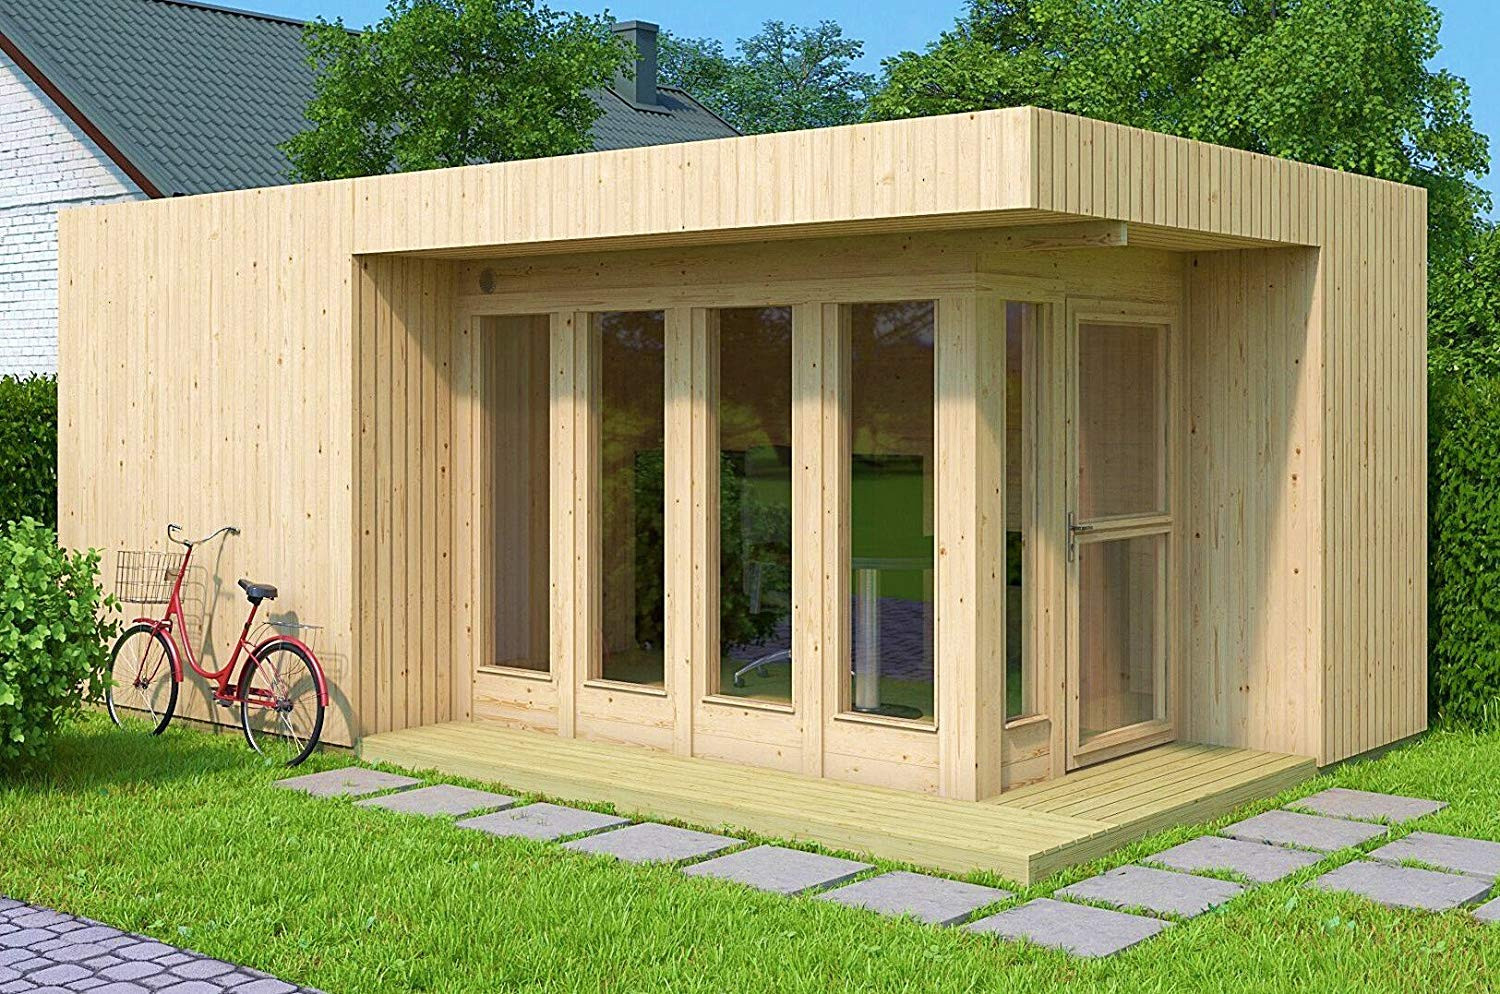 DIY Home Kits
 Amazon sells a DIY tiny house kit you can build yourself